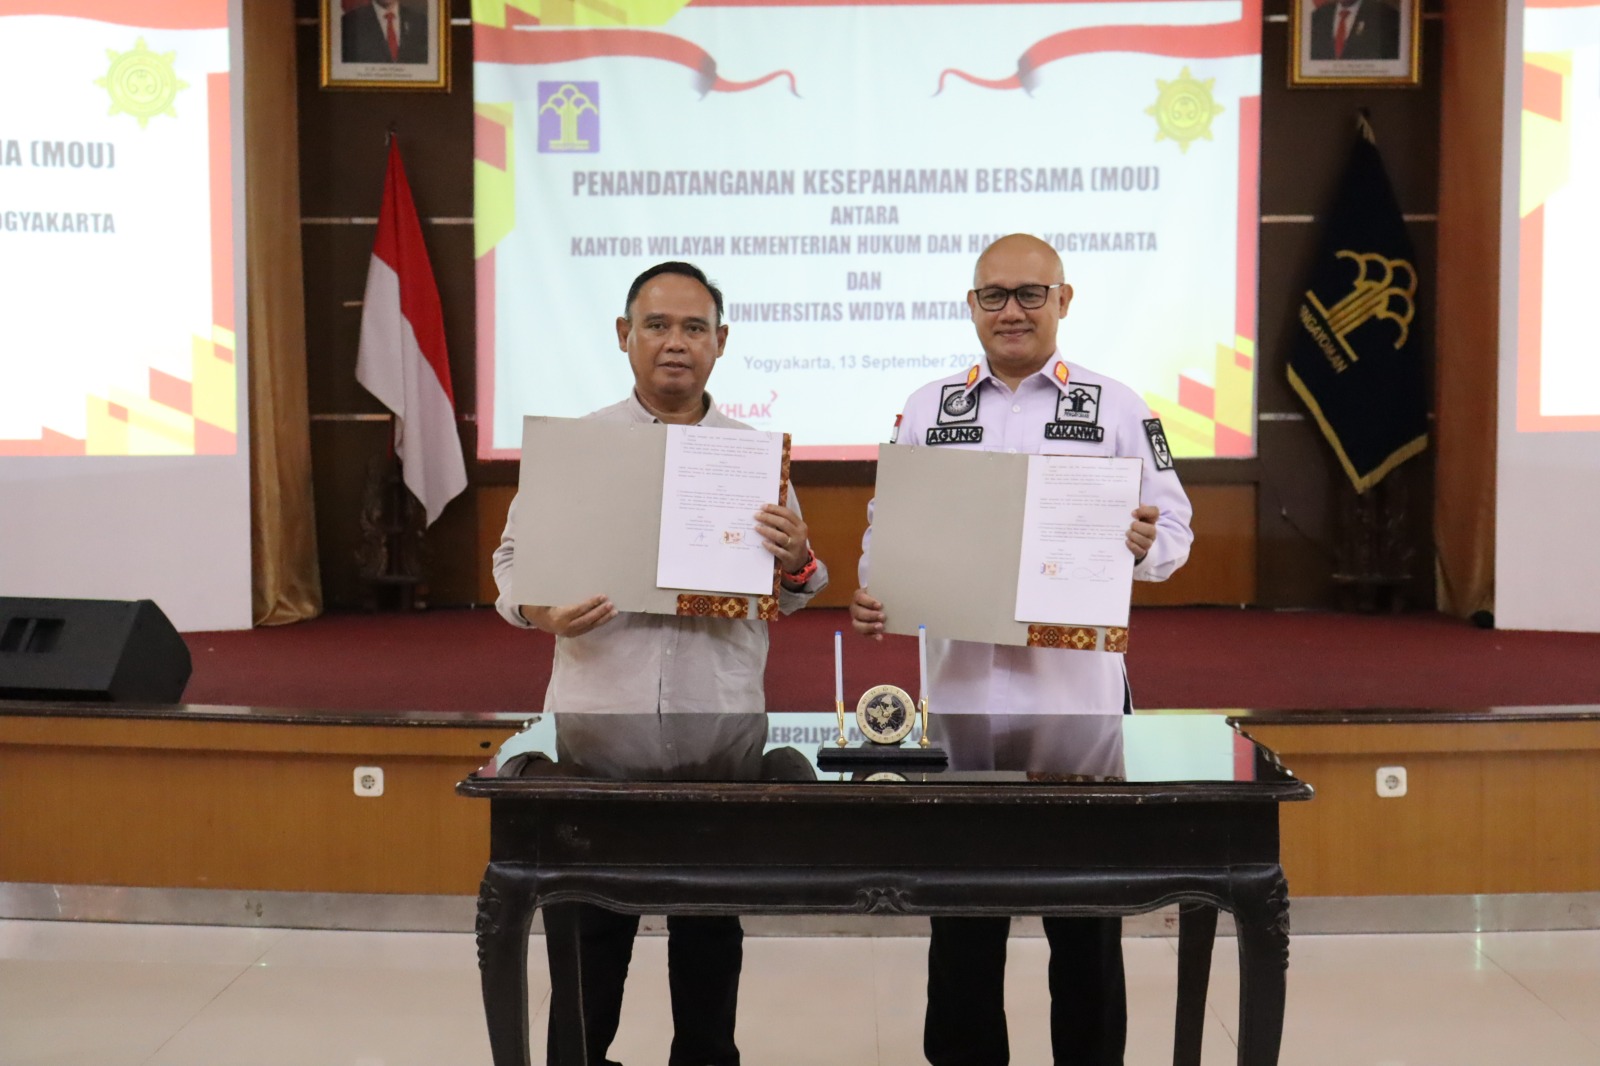 Kanwil Kemenkumham DIY dan Universitas Widya Mataram Tandatangani Nota Kesepahaman Bersama, Sinergi Pembangunan Hukum